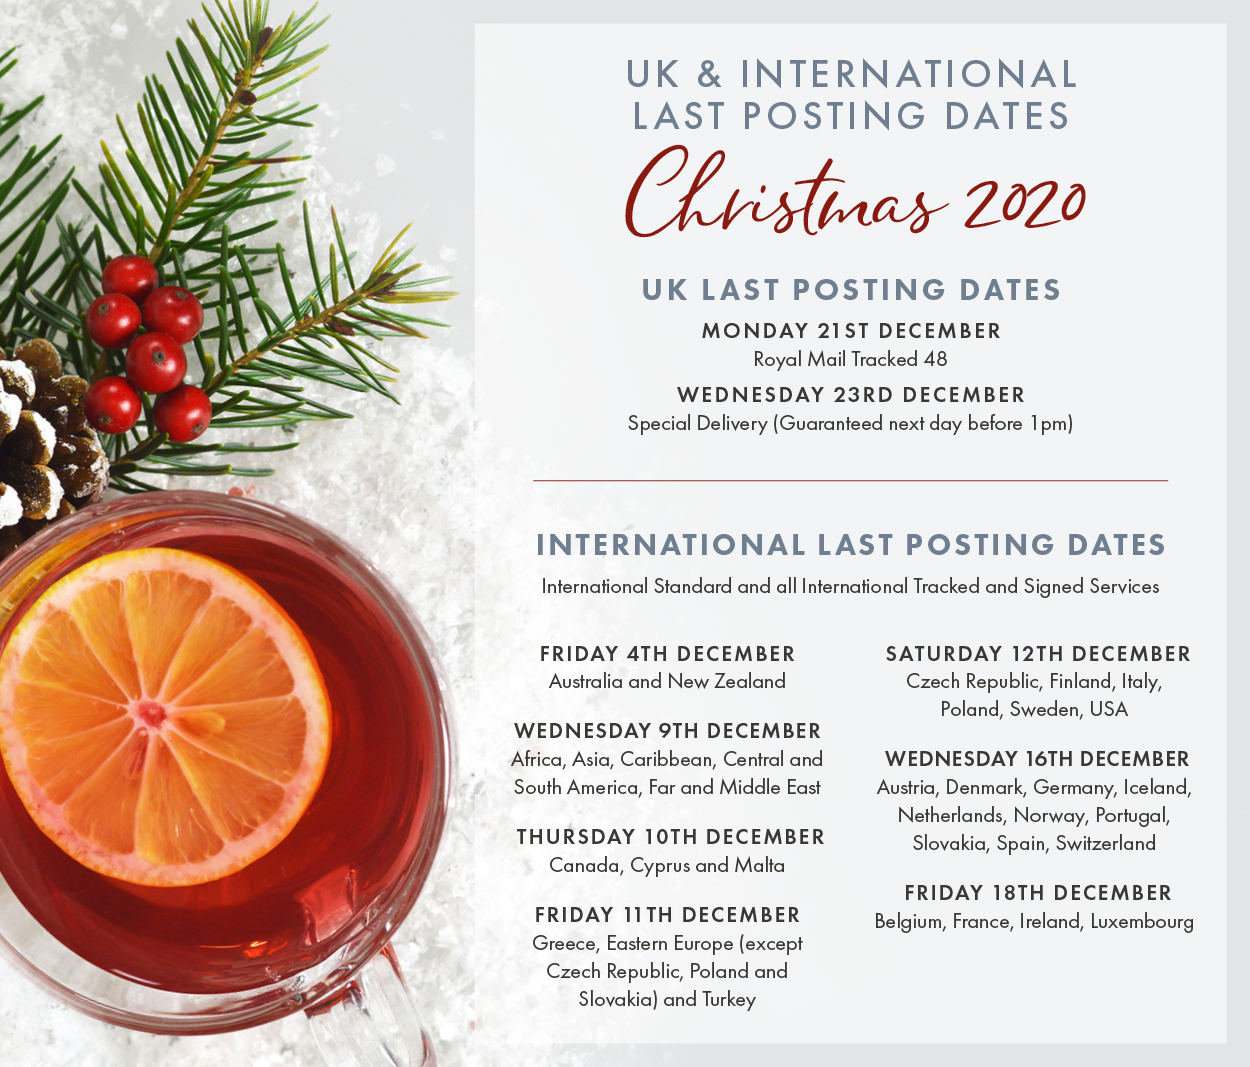 UK & International Last Posting Dates Christmas 2020